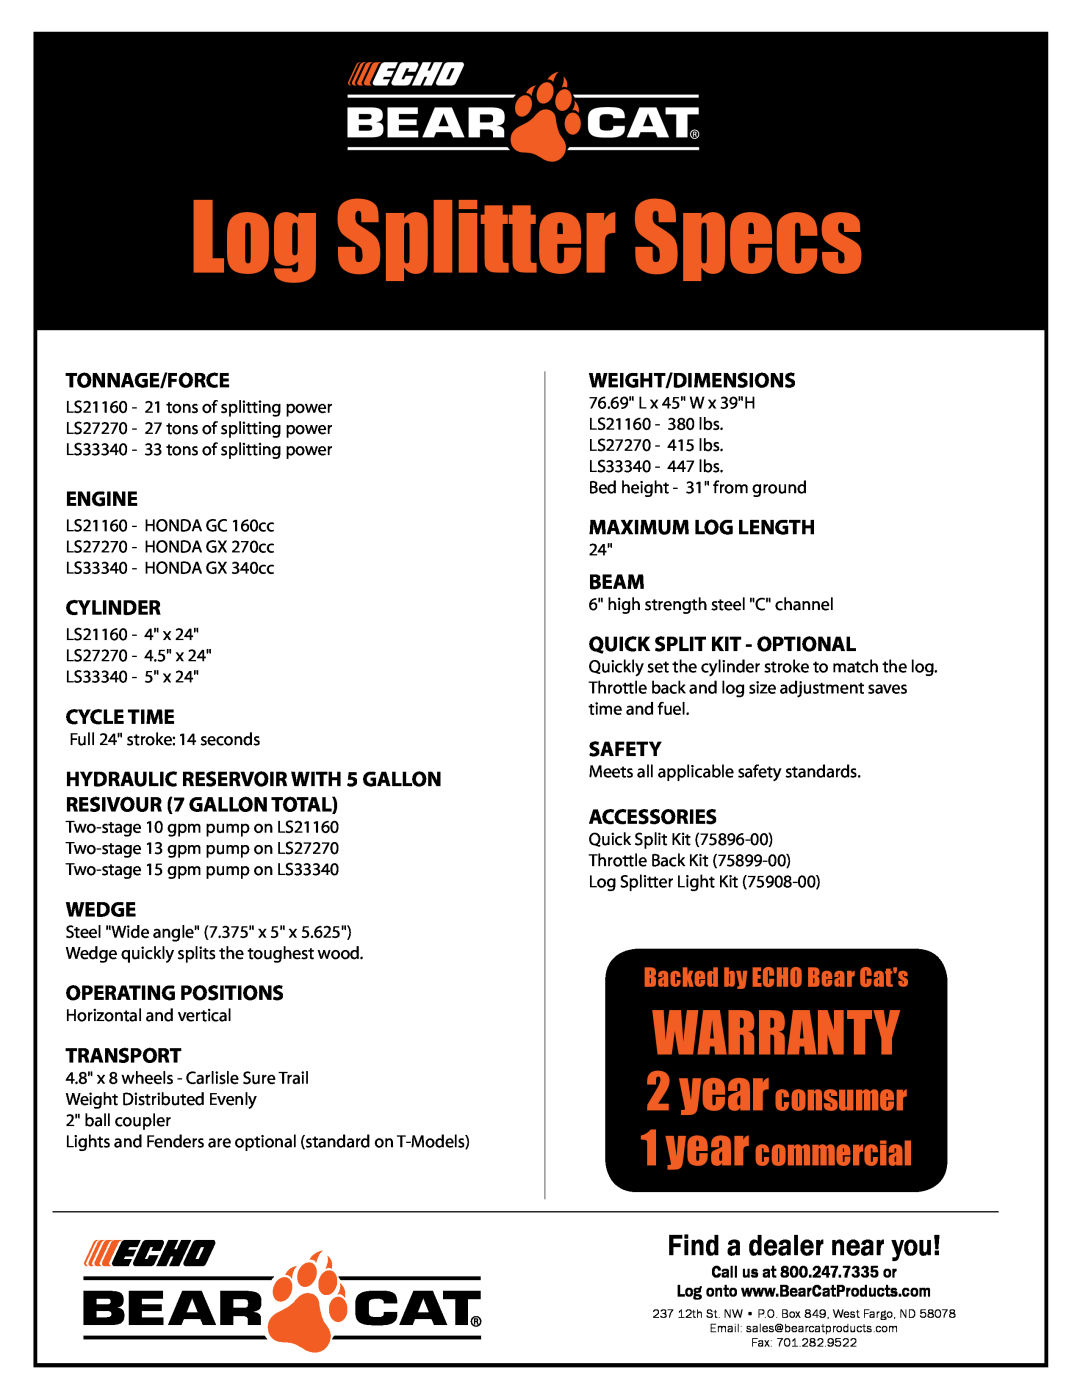 Echo LS27270 manual Log Splitter Specs, Warranty, year consumer 1 year commercial, Find a dealer near you 